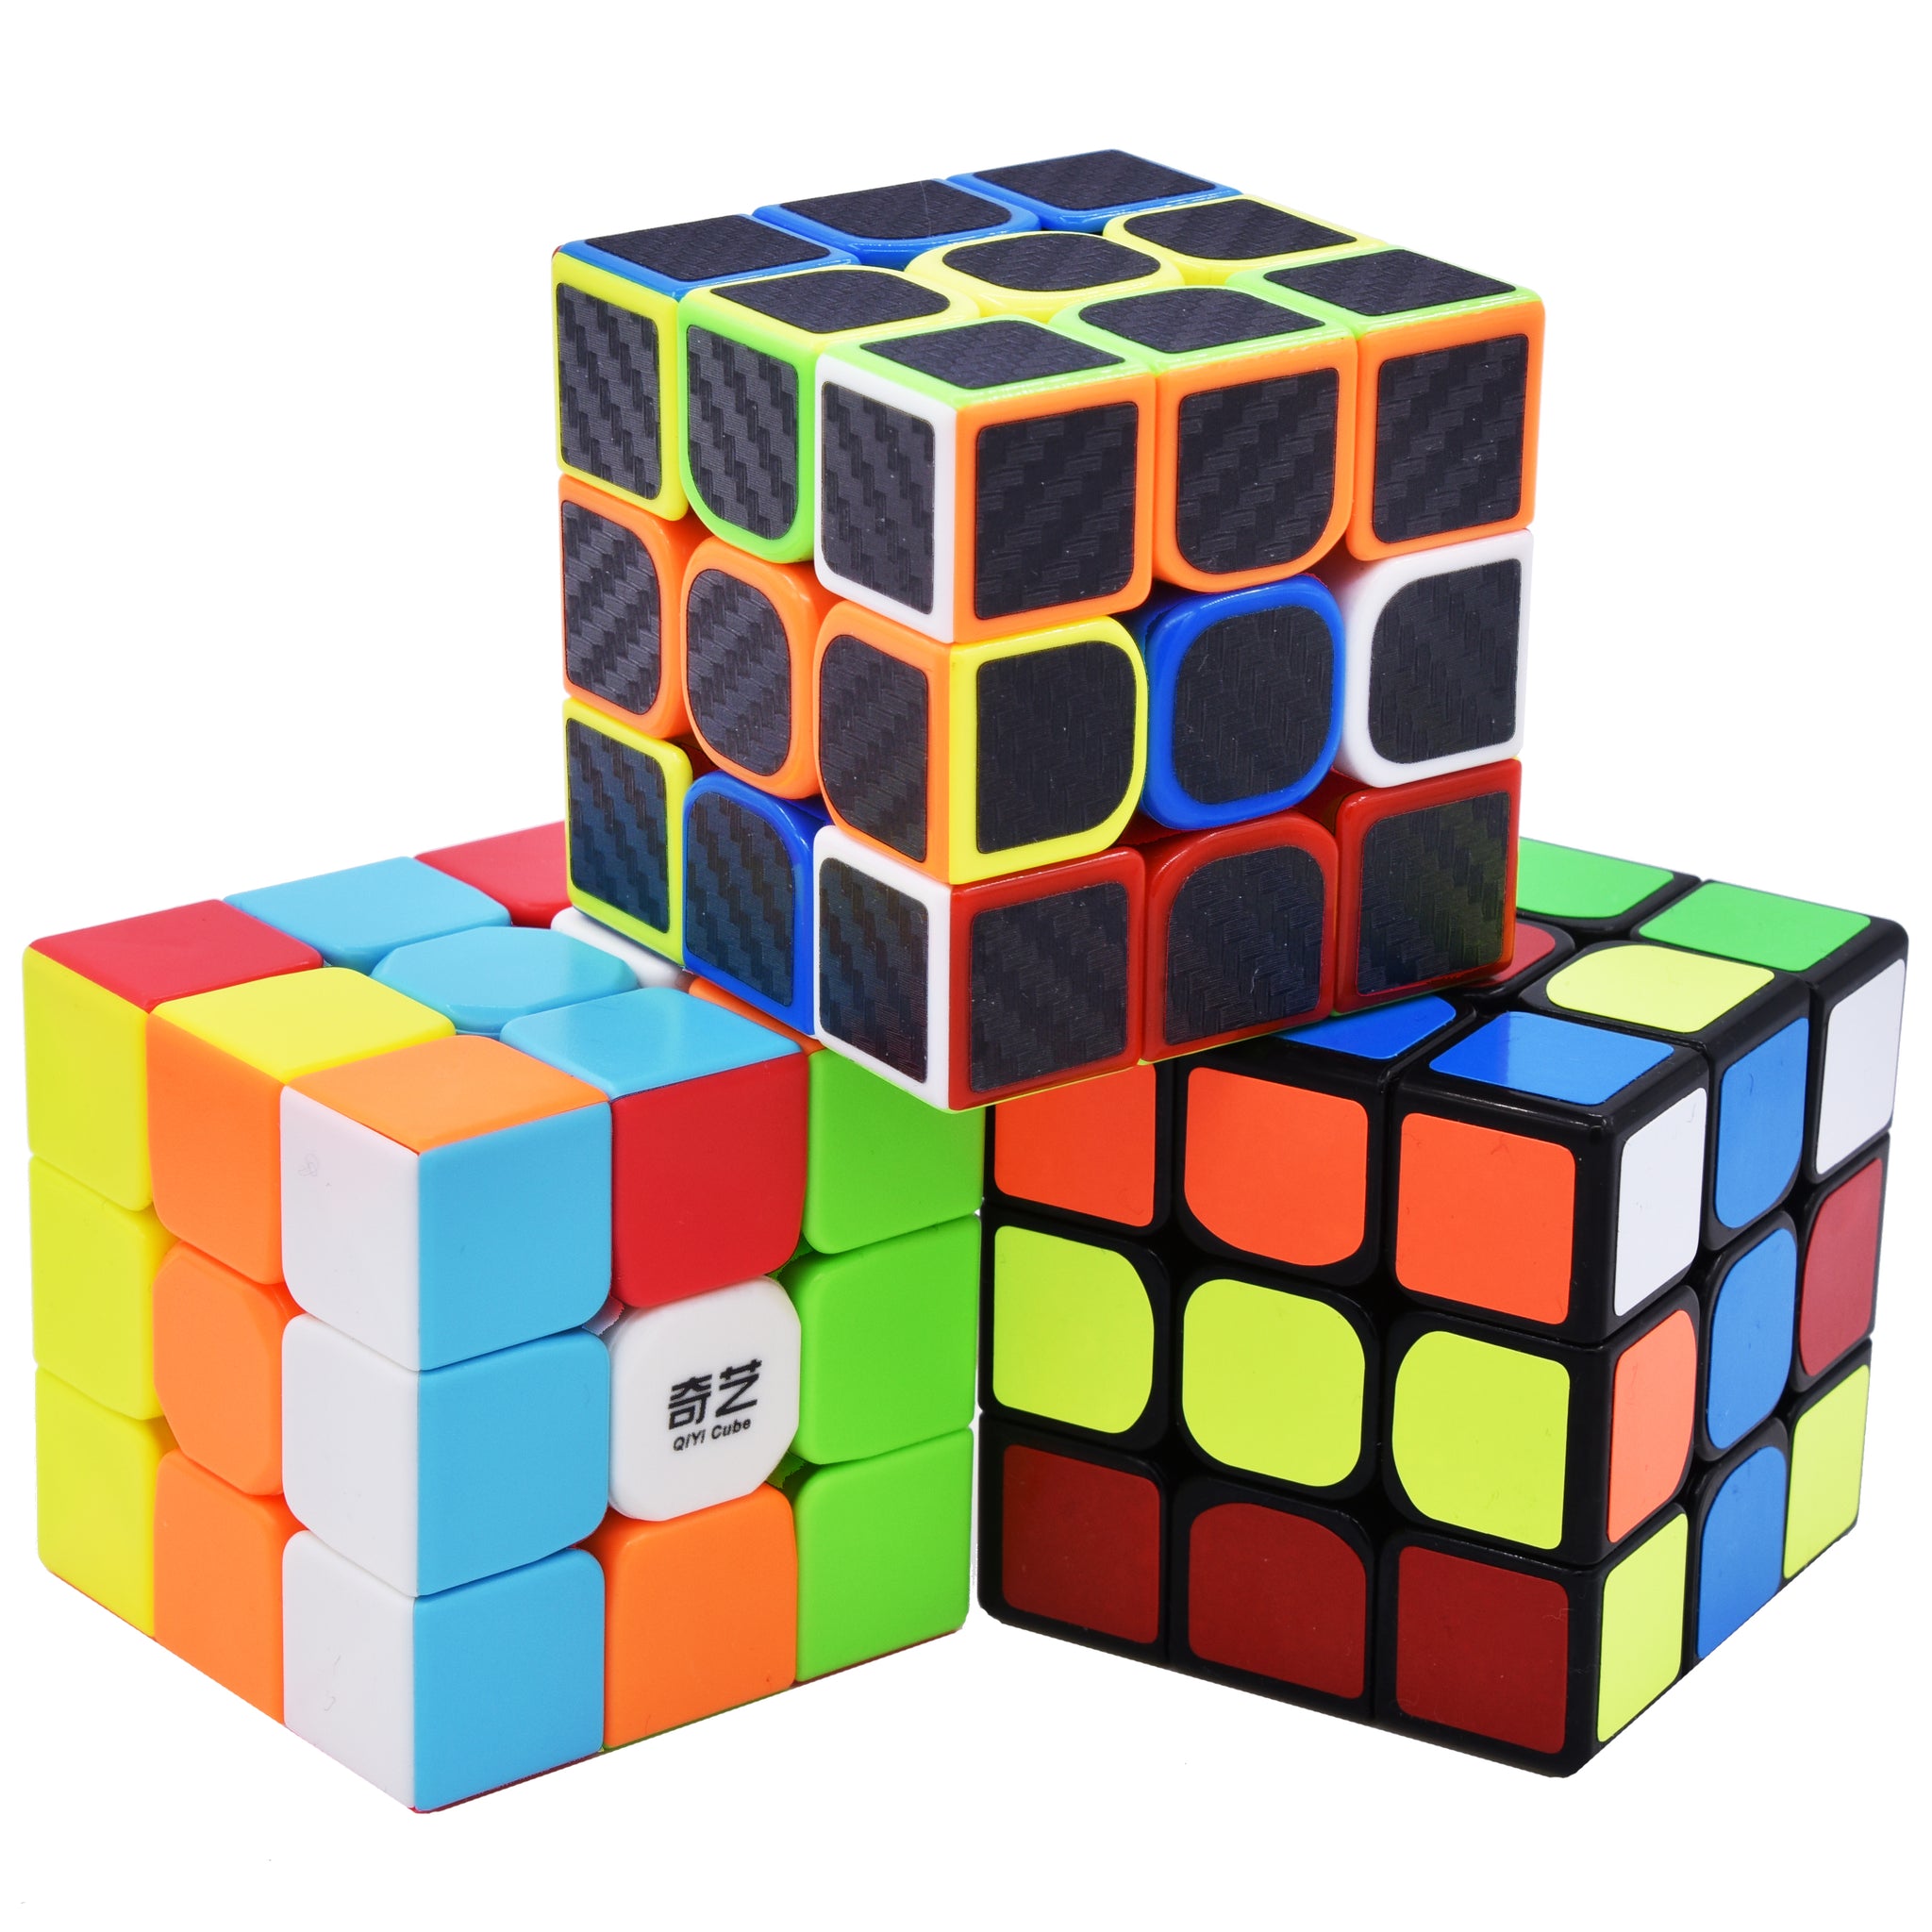  Speed Cube Set, Carbon Fiber Sticker Puzzle Cube